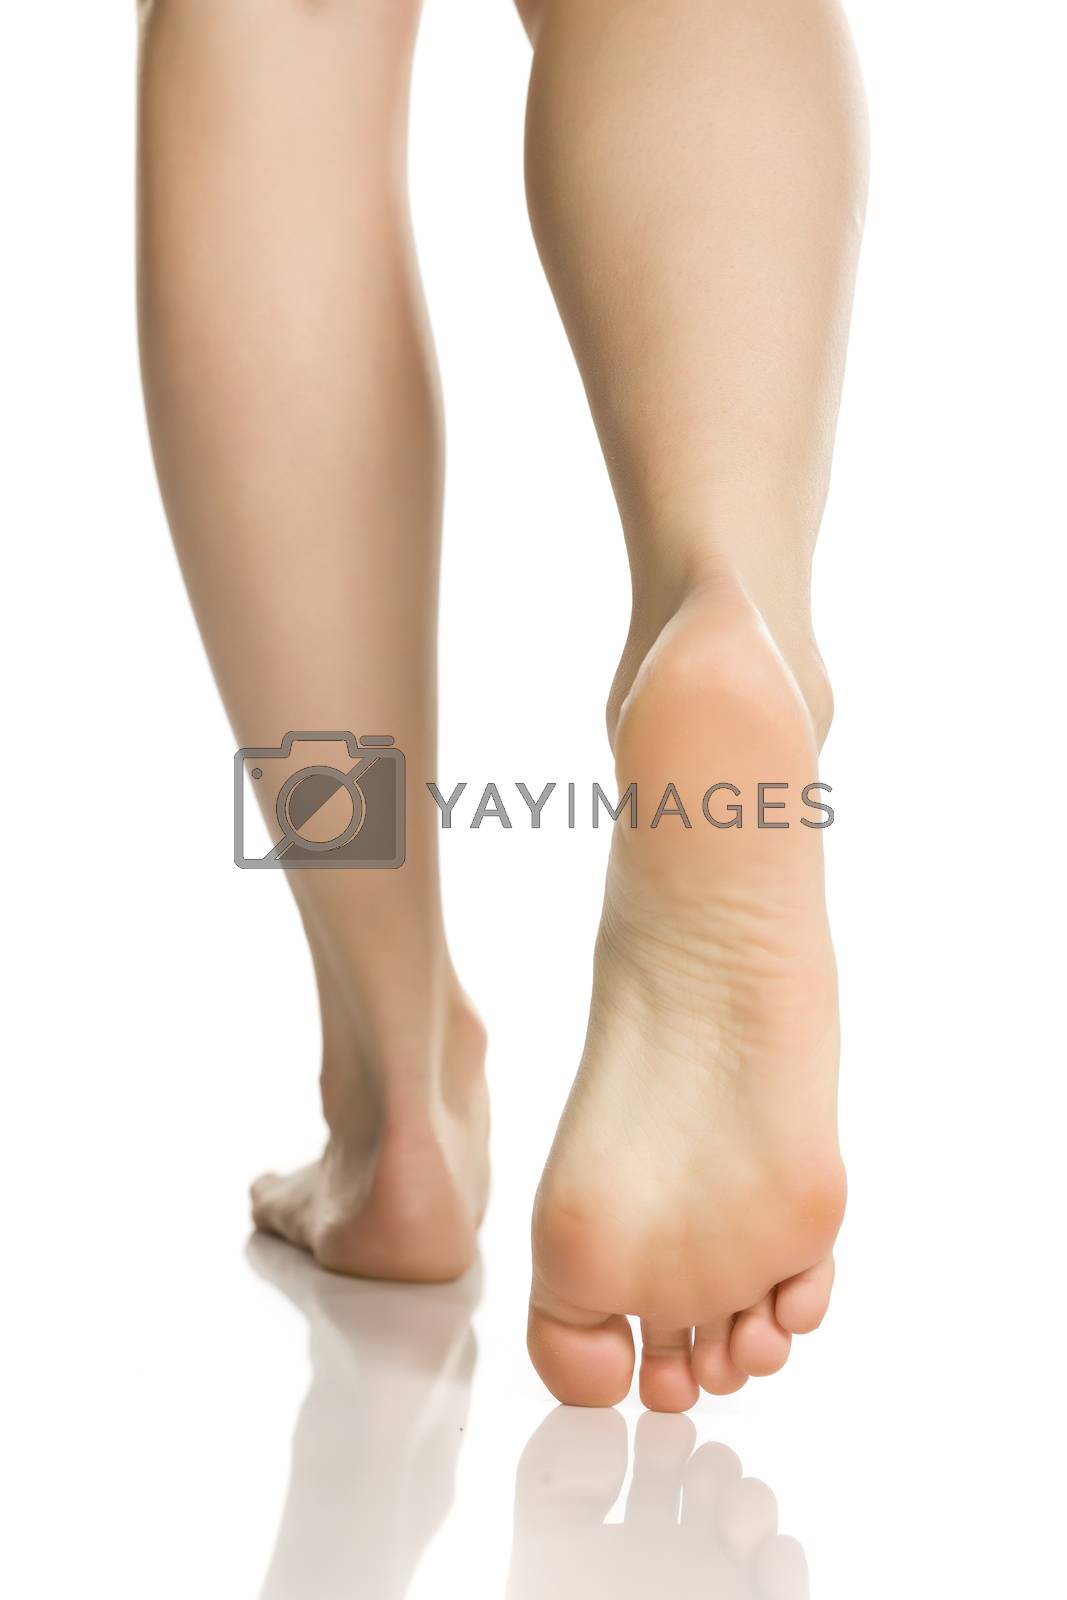 Royalty free image of Female feet  on white background by Vladimirfloyd